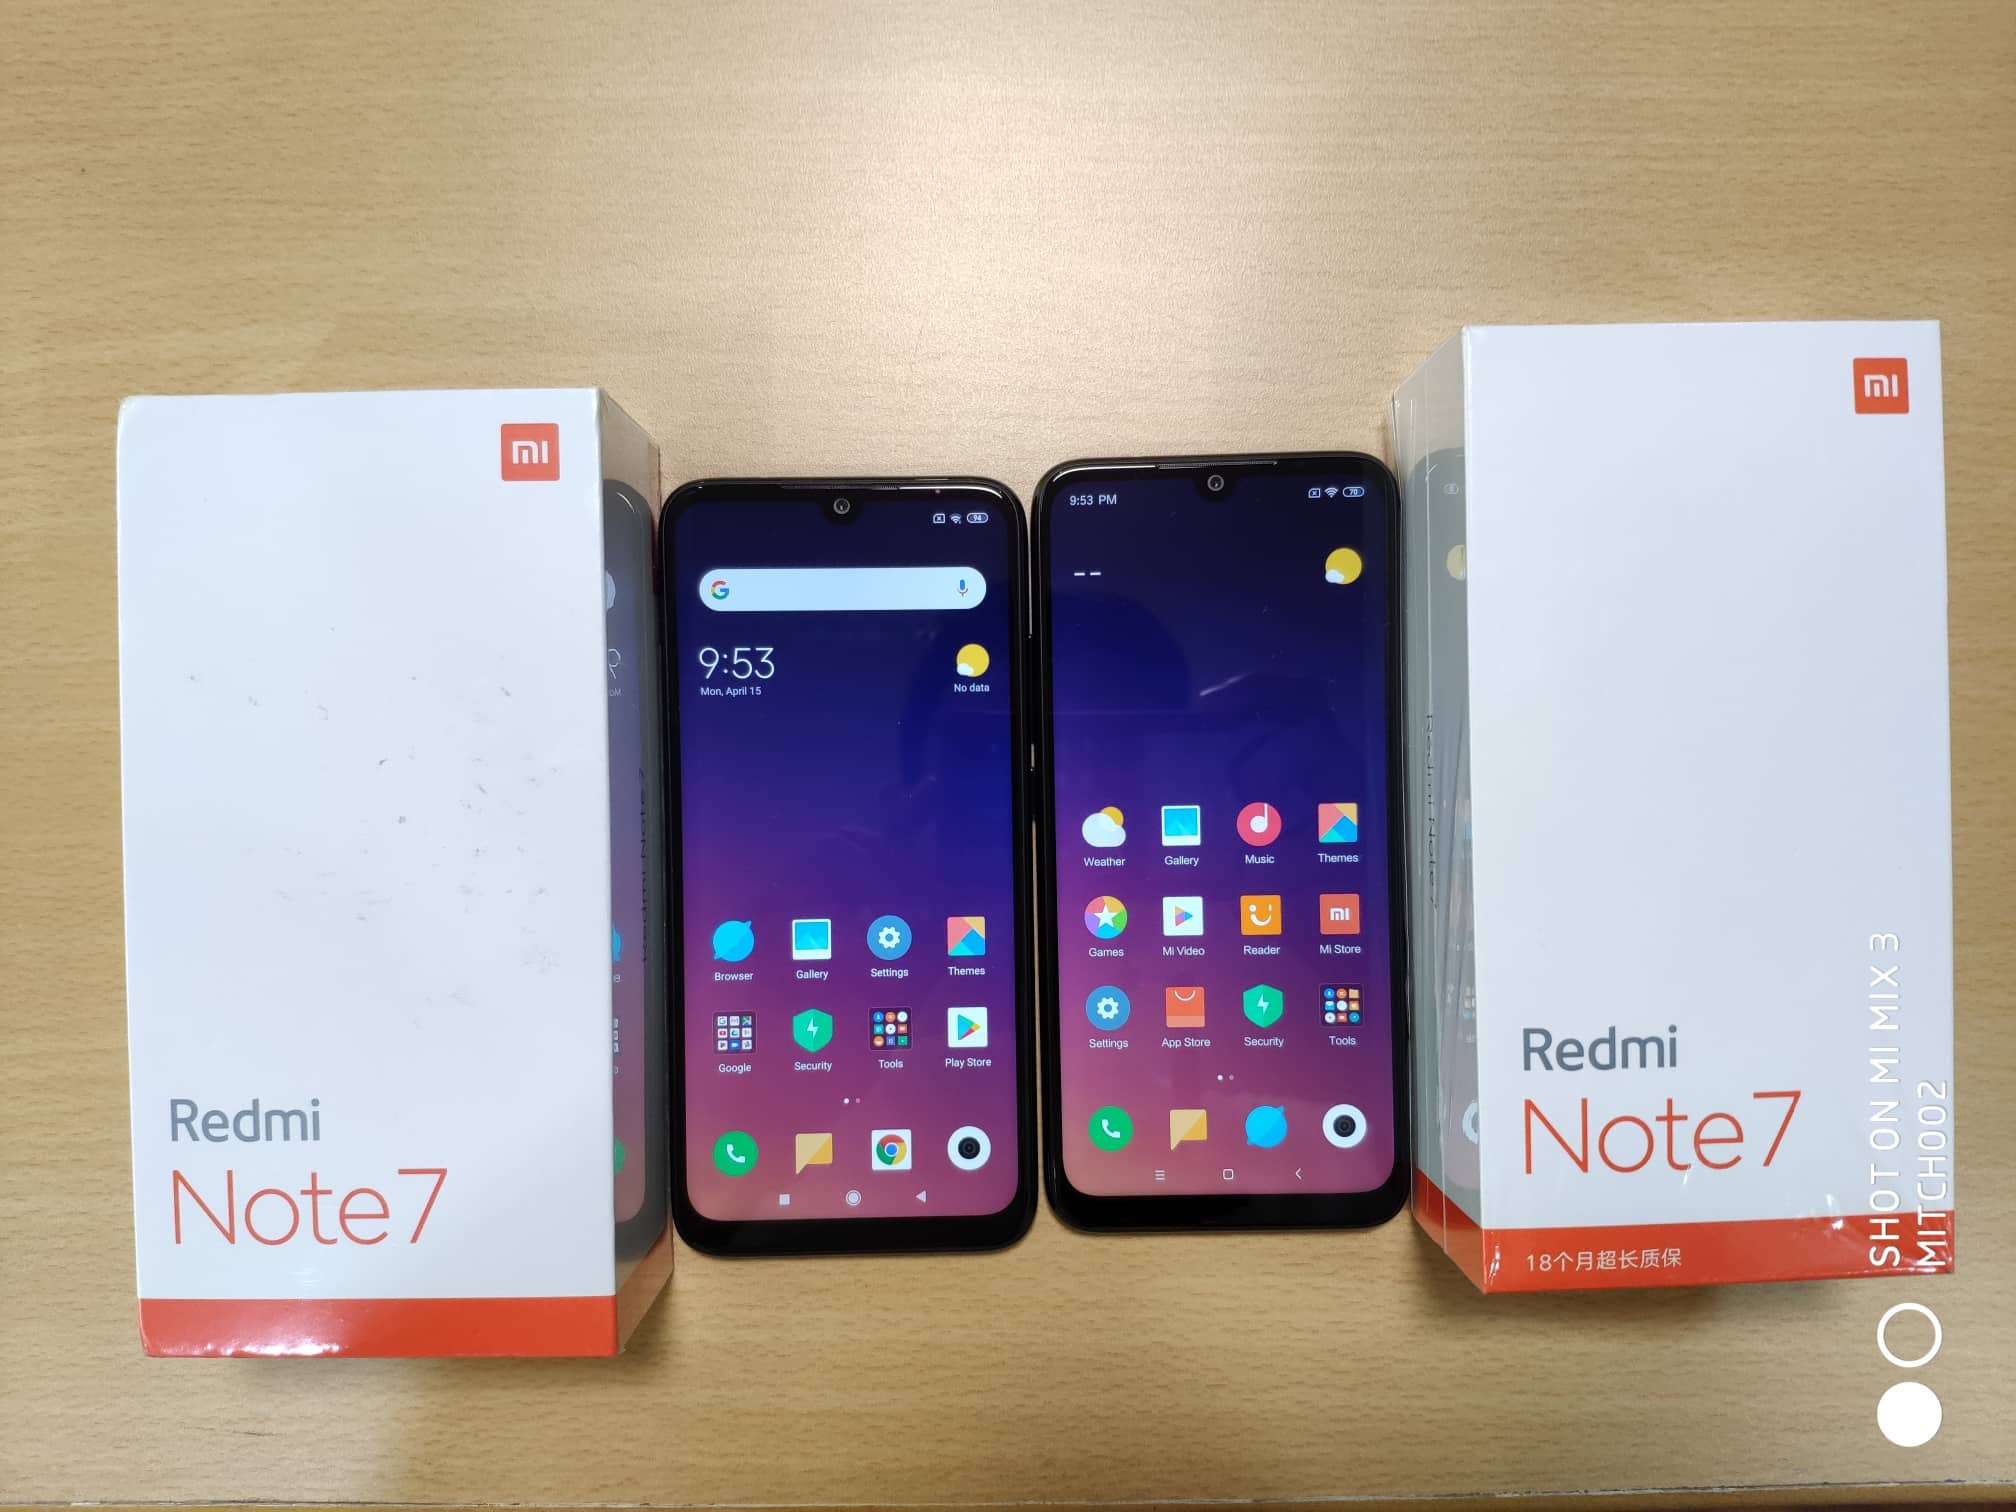 Redmi Note 7 Global Version